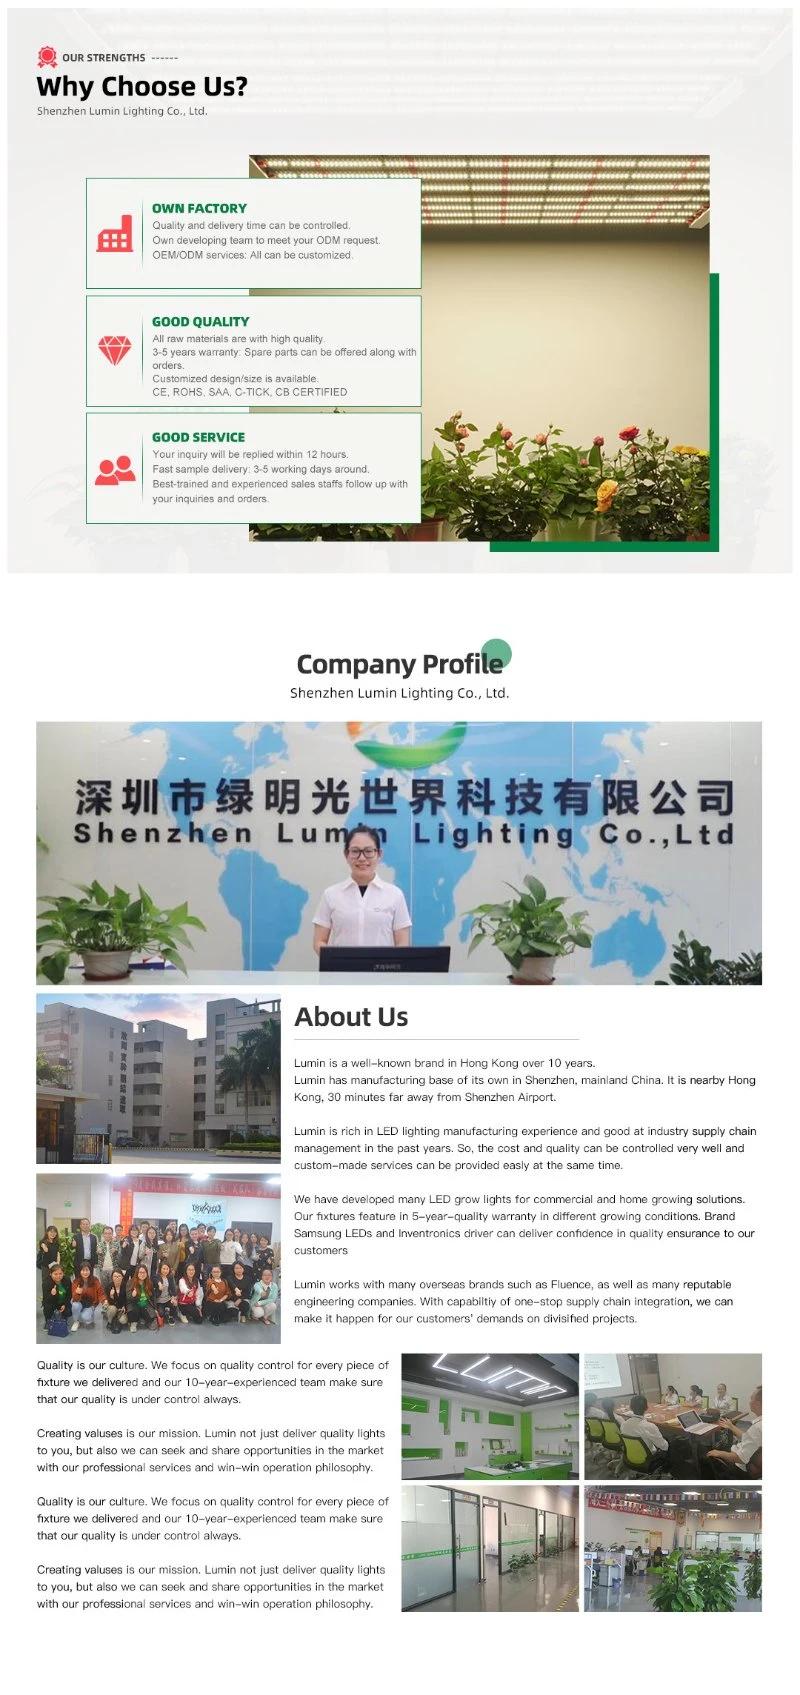 Ilummini 320W LED Grow Light WiFi Smart Control 660nm 730nm UV Light for Plants